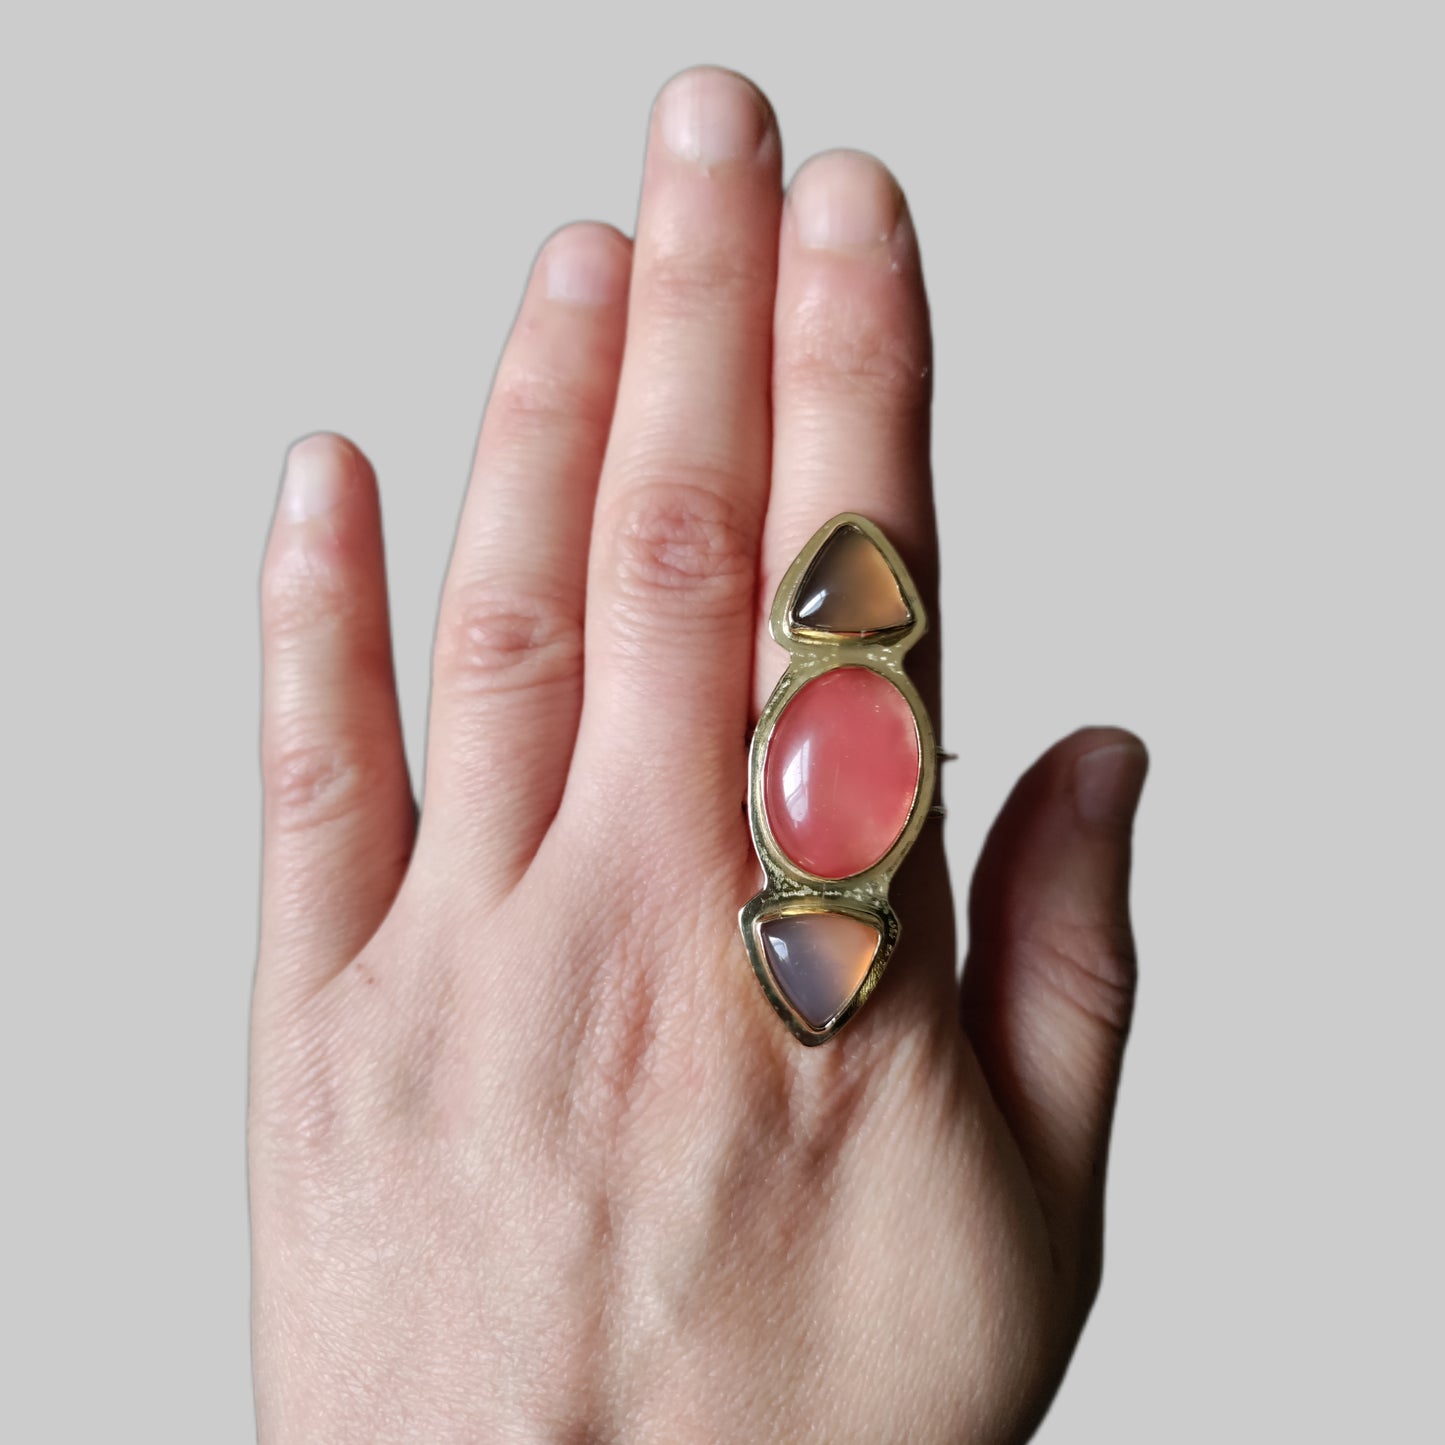 LEIA&CO - Massive long pink stones ring LEIA&CO adjustable size 8 3/4 US